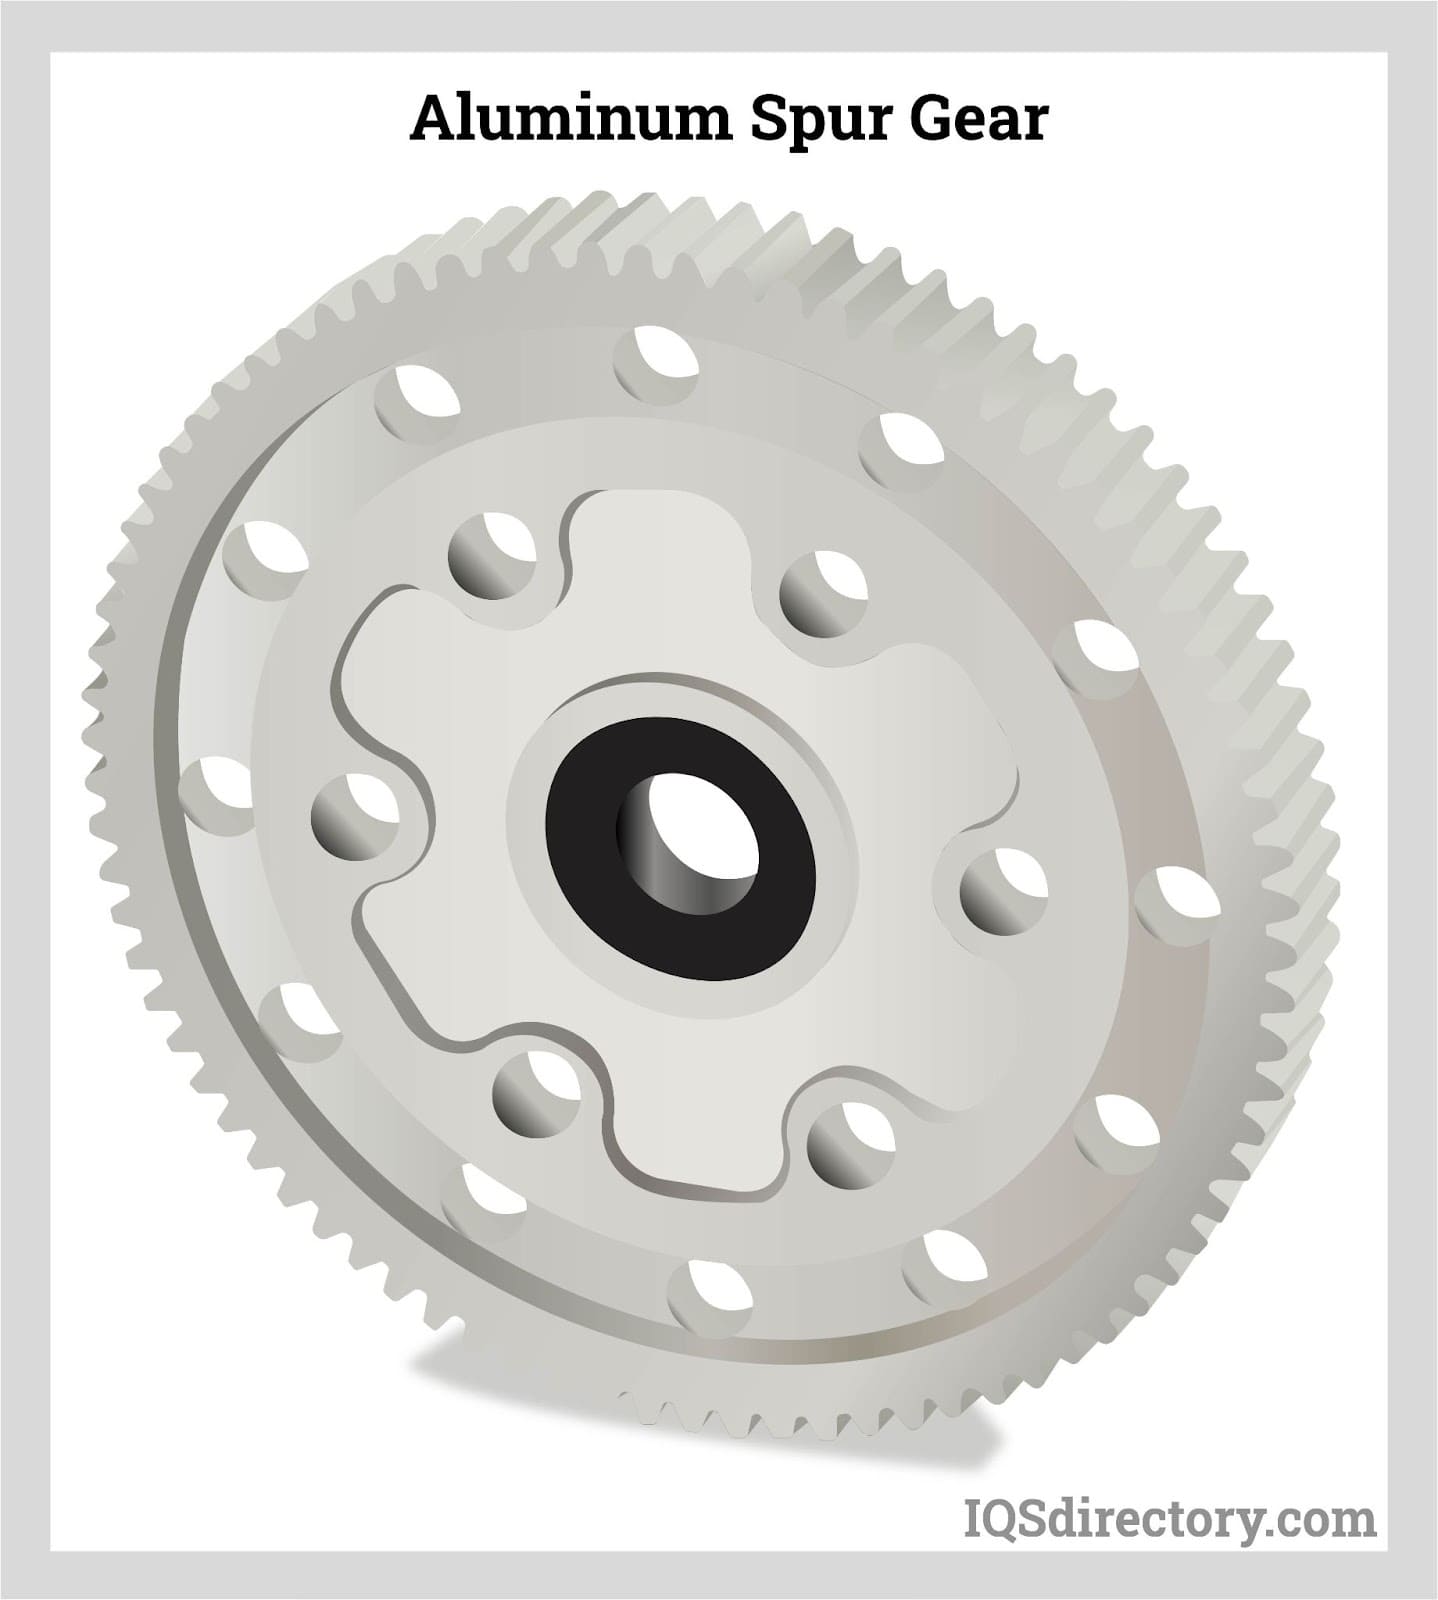 Aluminum Spur Gear